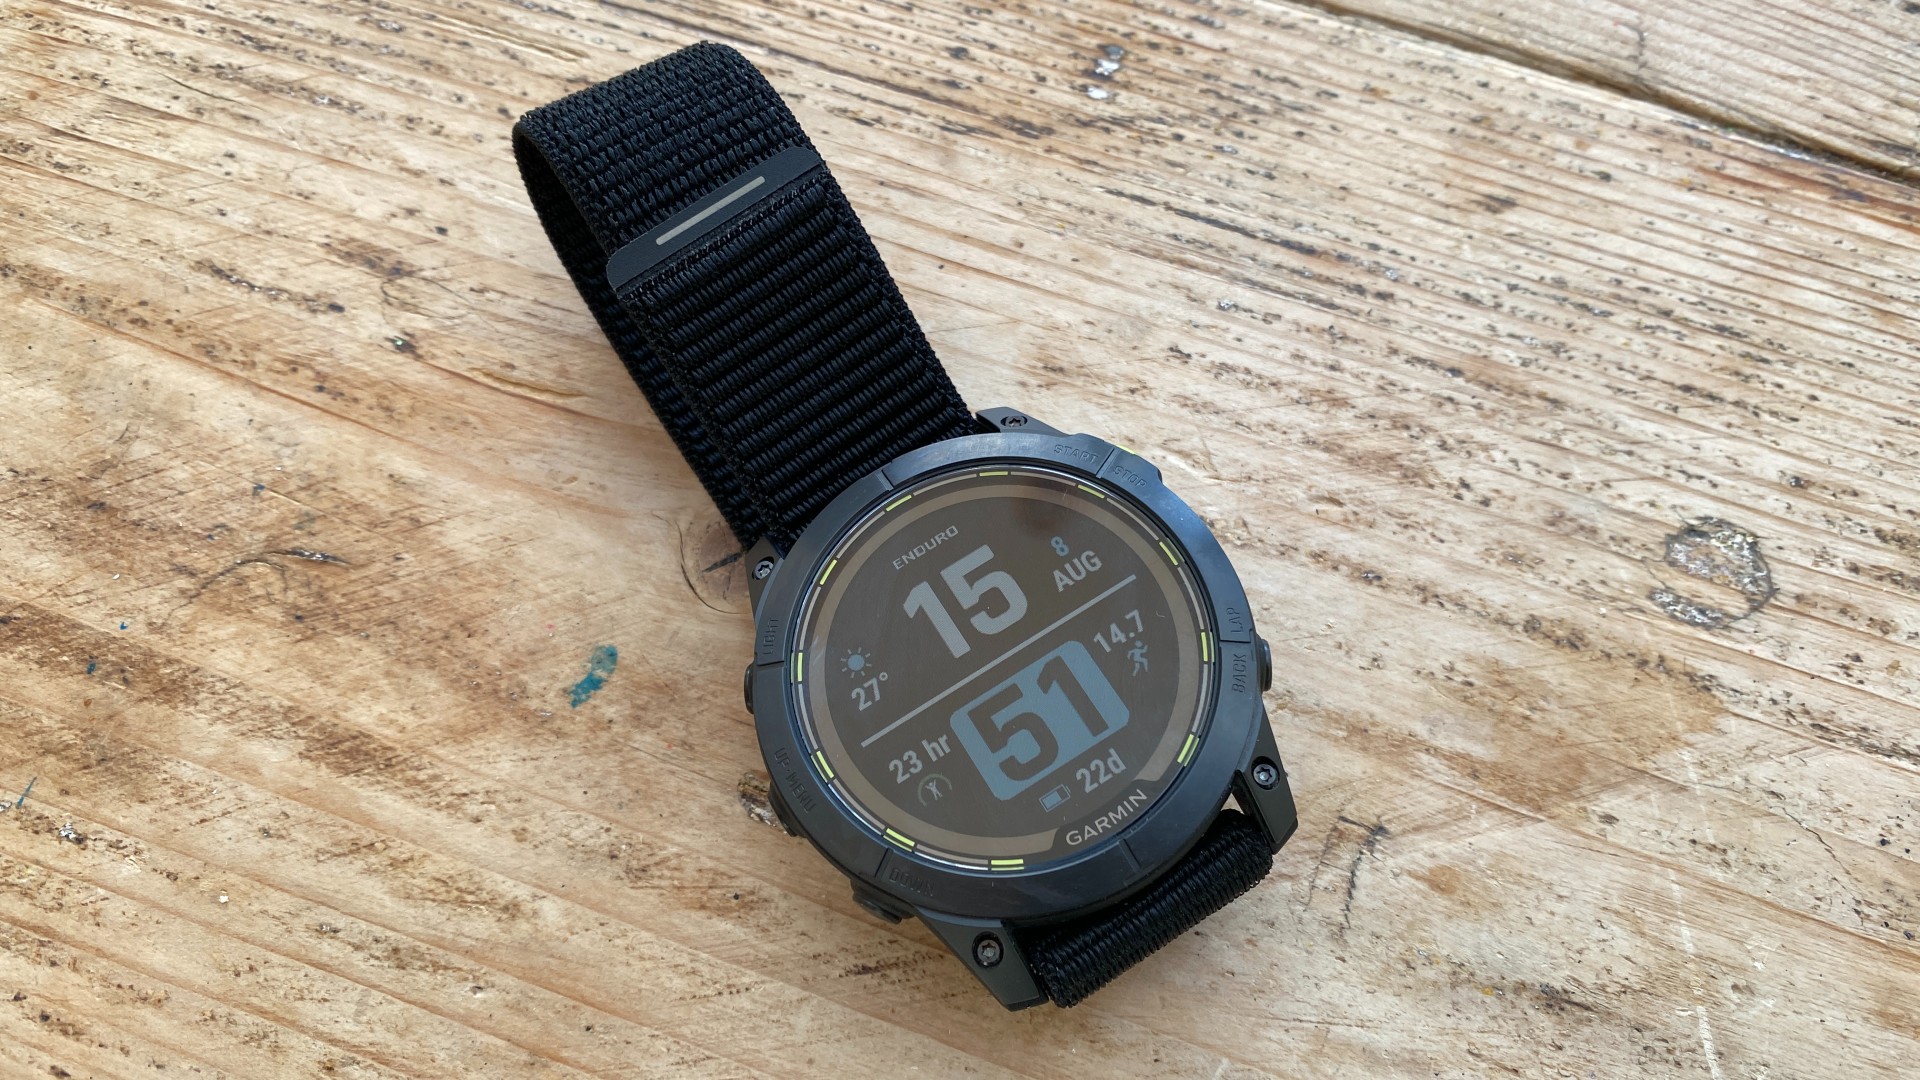 Garmin Enduro 2 multisport GPS watch